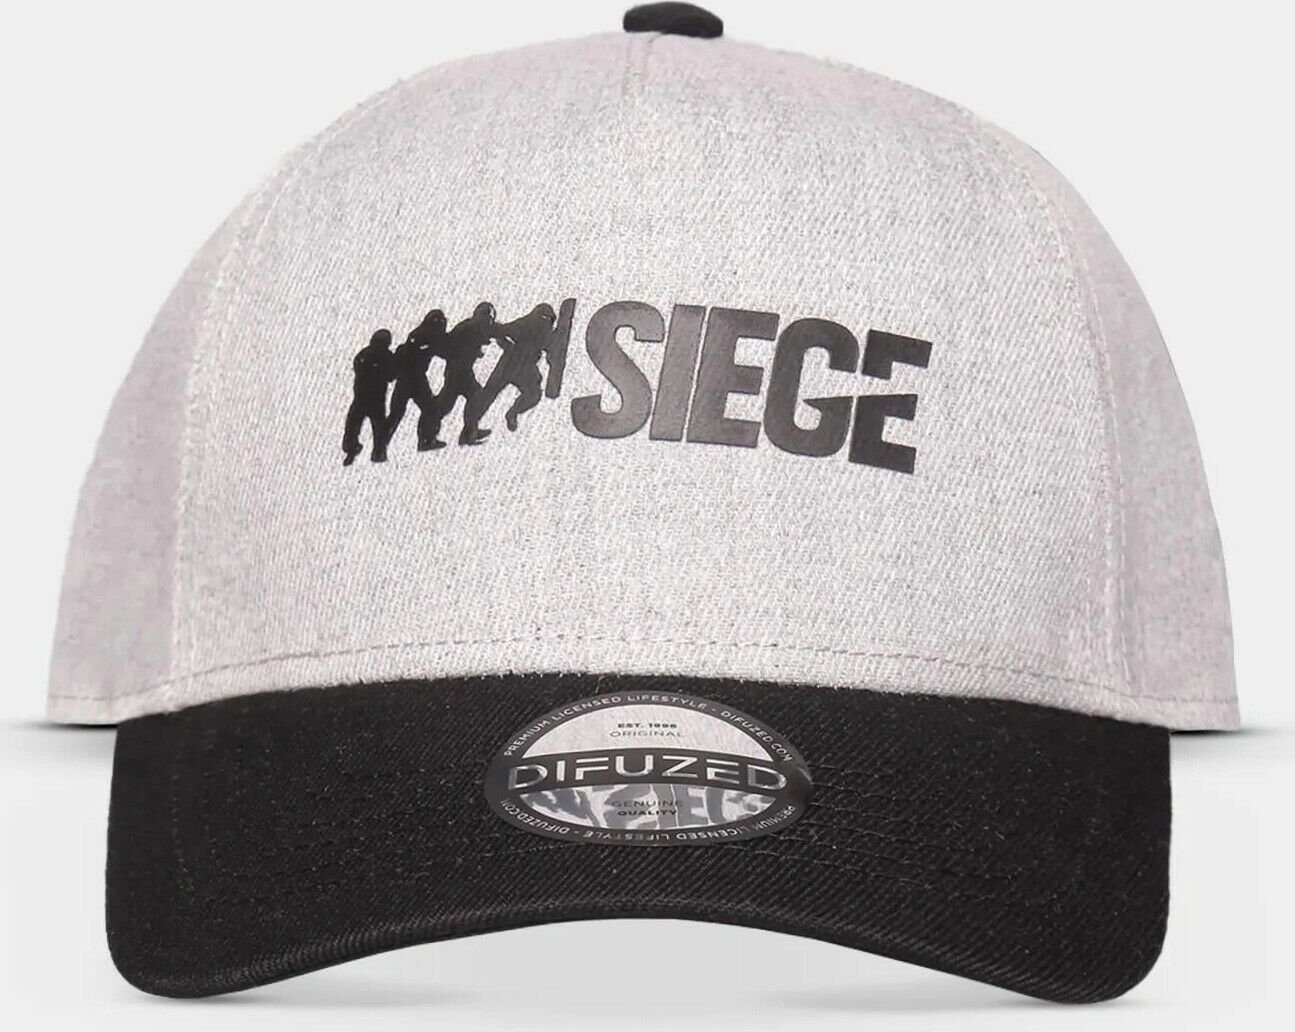 6 Siege Baseball Cap 6-Siege - Logo - Men's Adjustable Cap Grey Neu Top